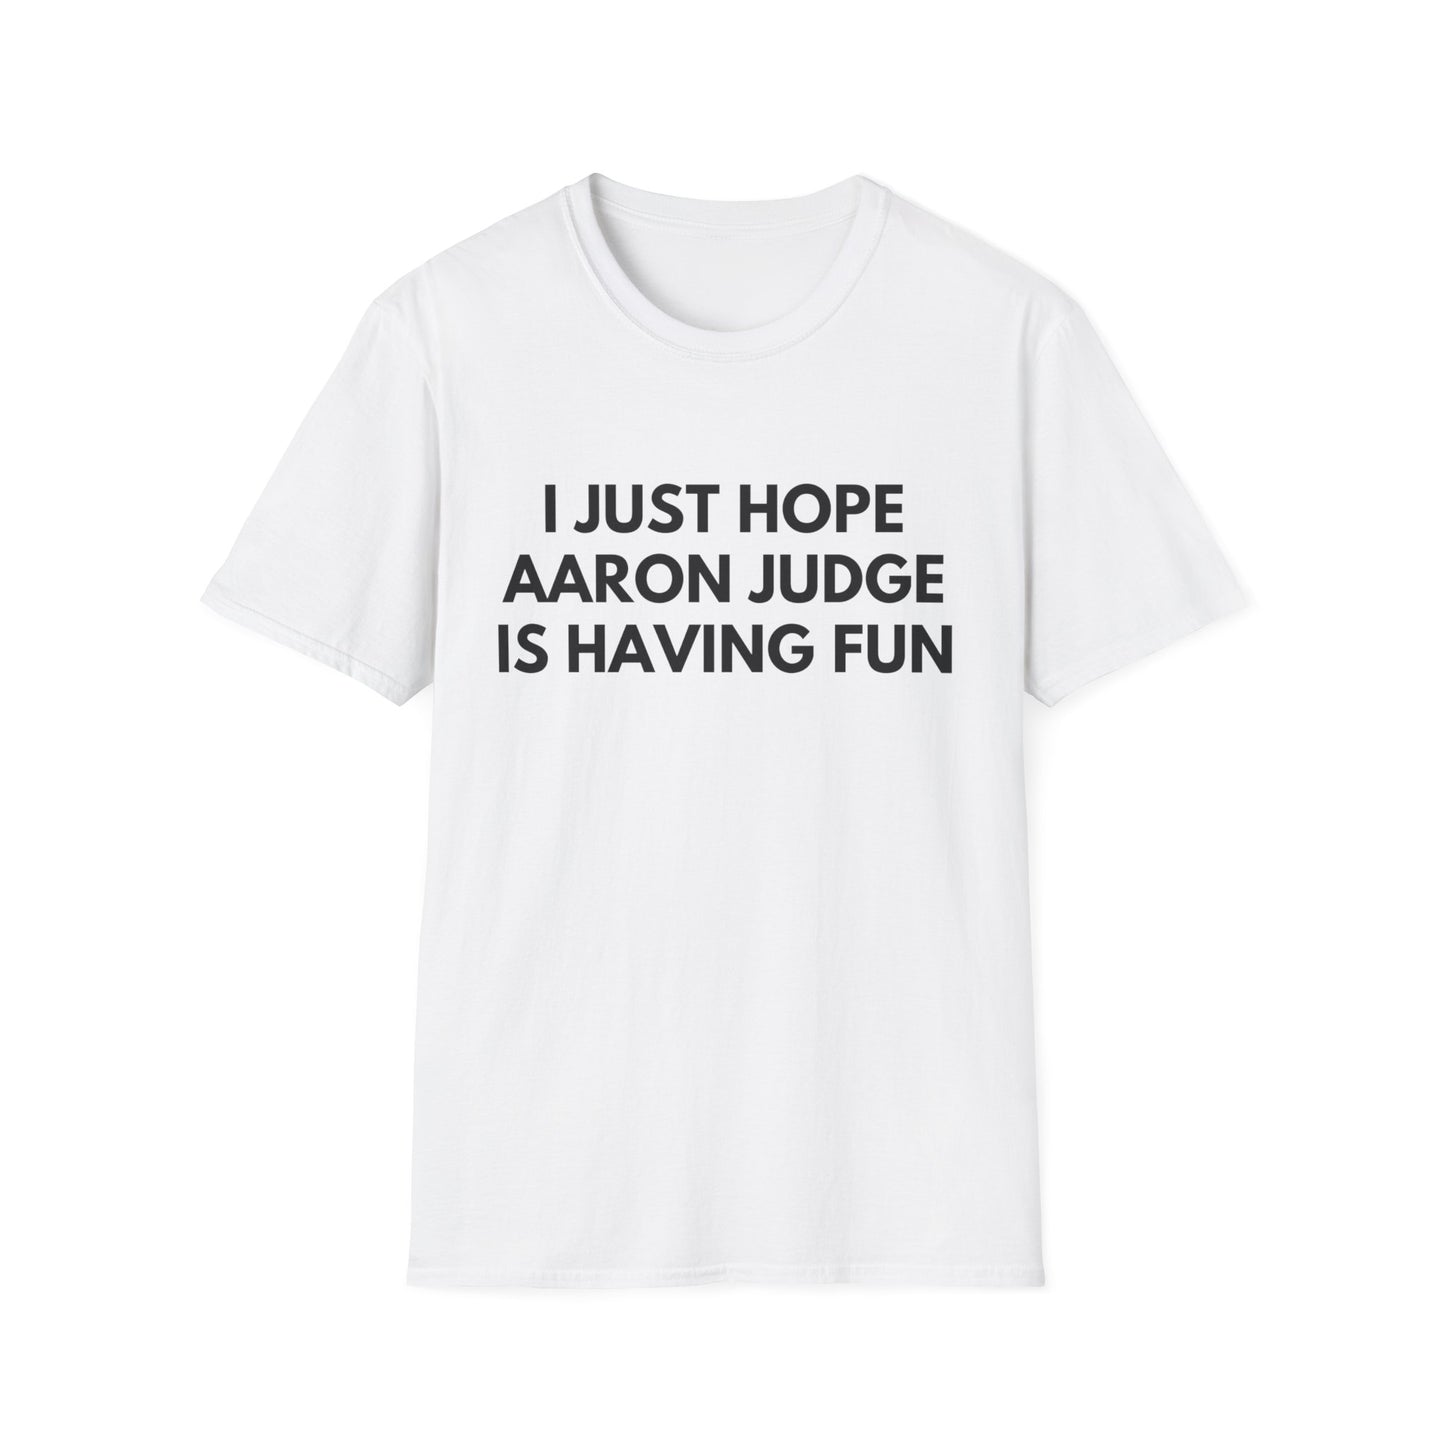 Aaron Judge Having Fun - Unisex T-shirt